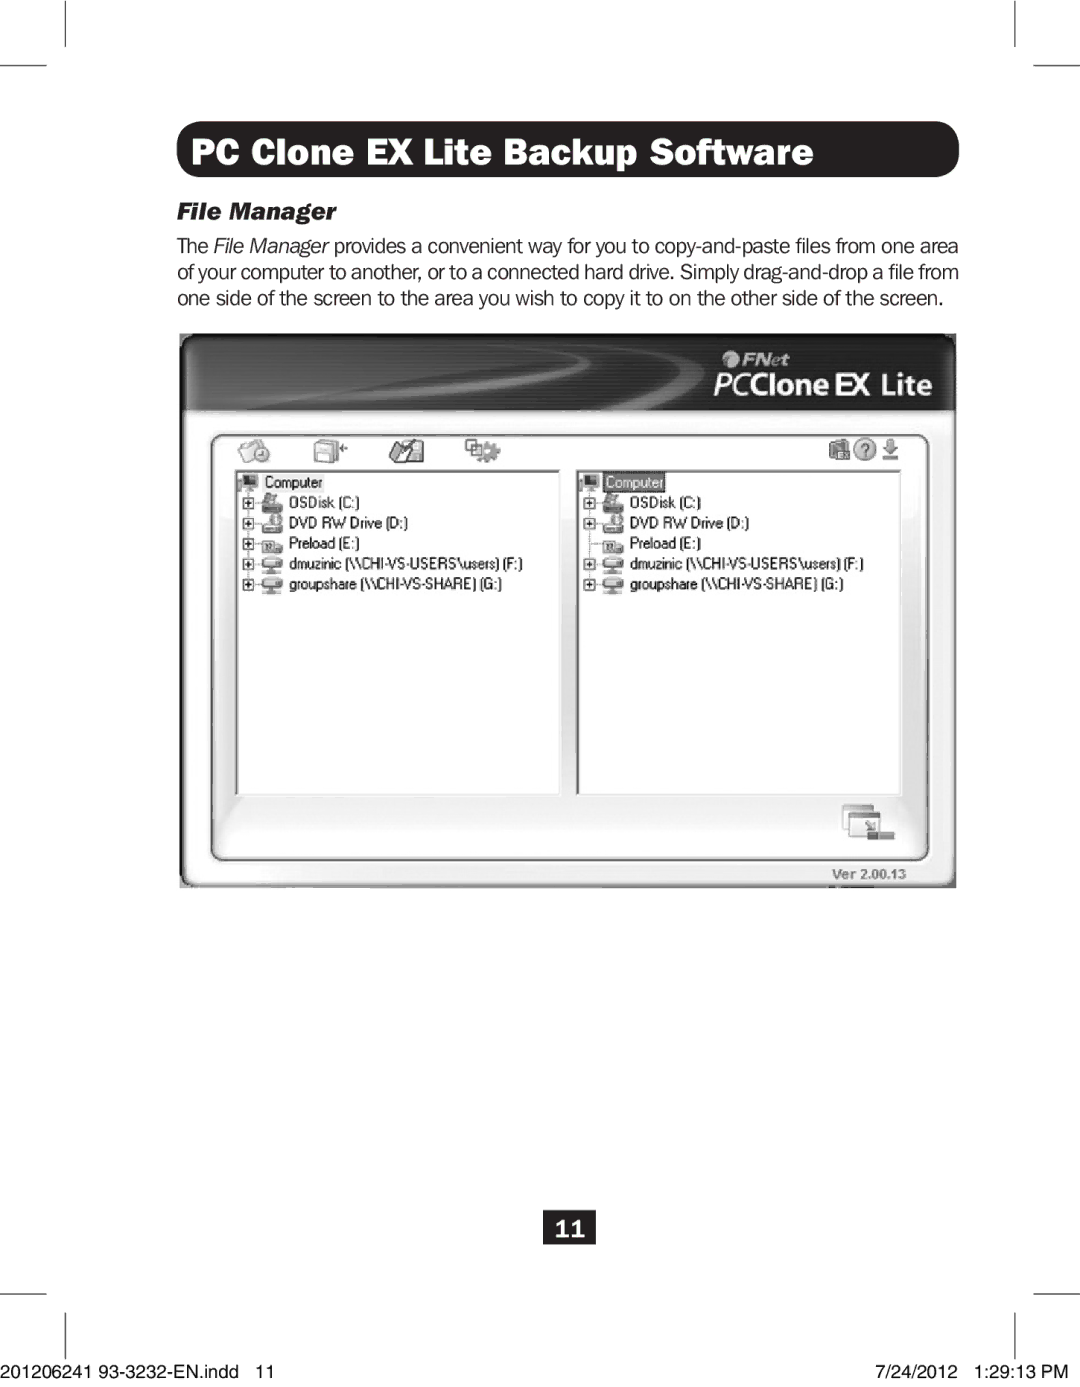 Tripp Lite U338-000 owner manual File Manager 